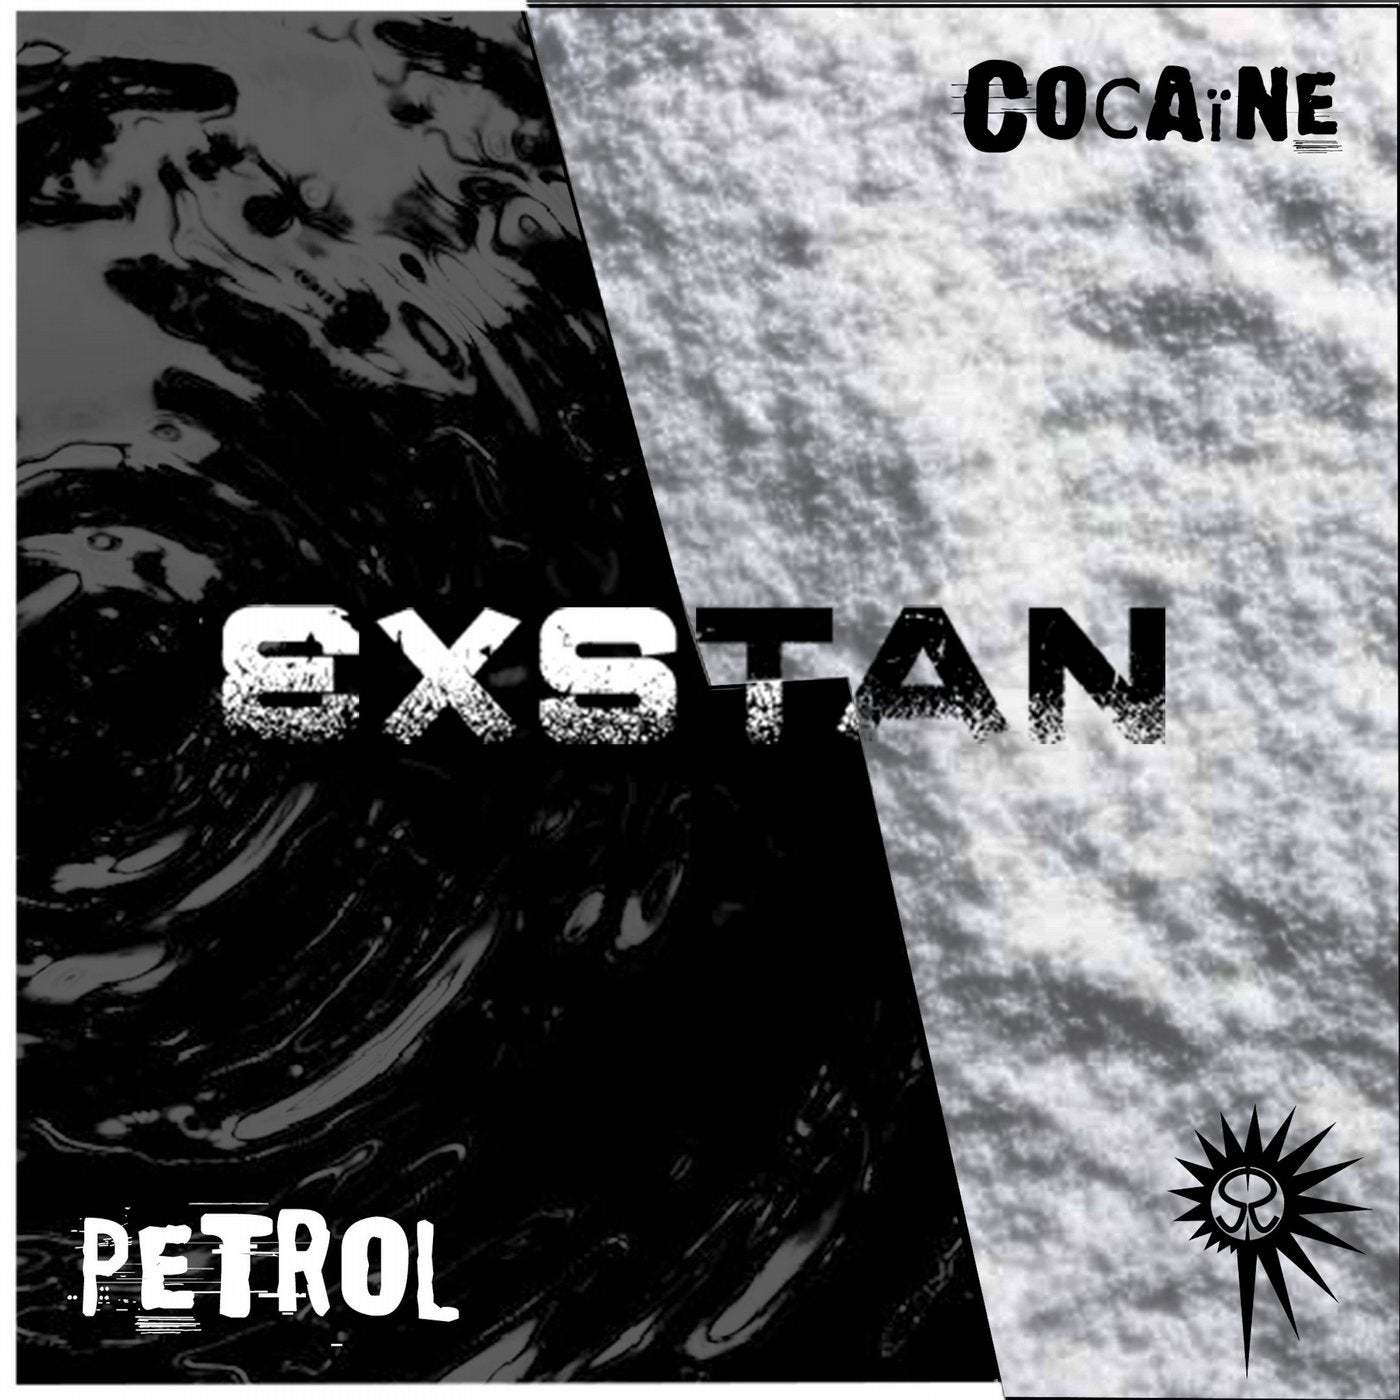 Petrol & Cocaïne